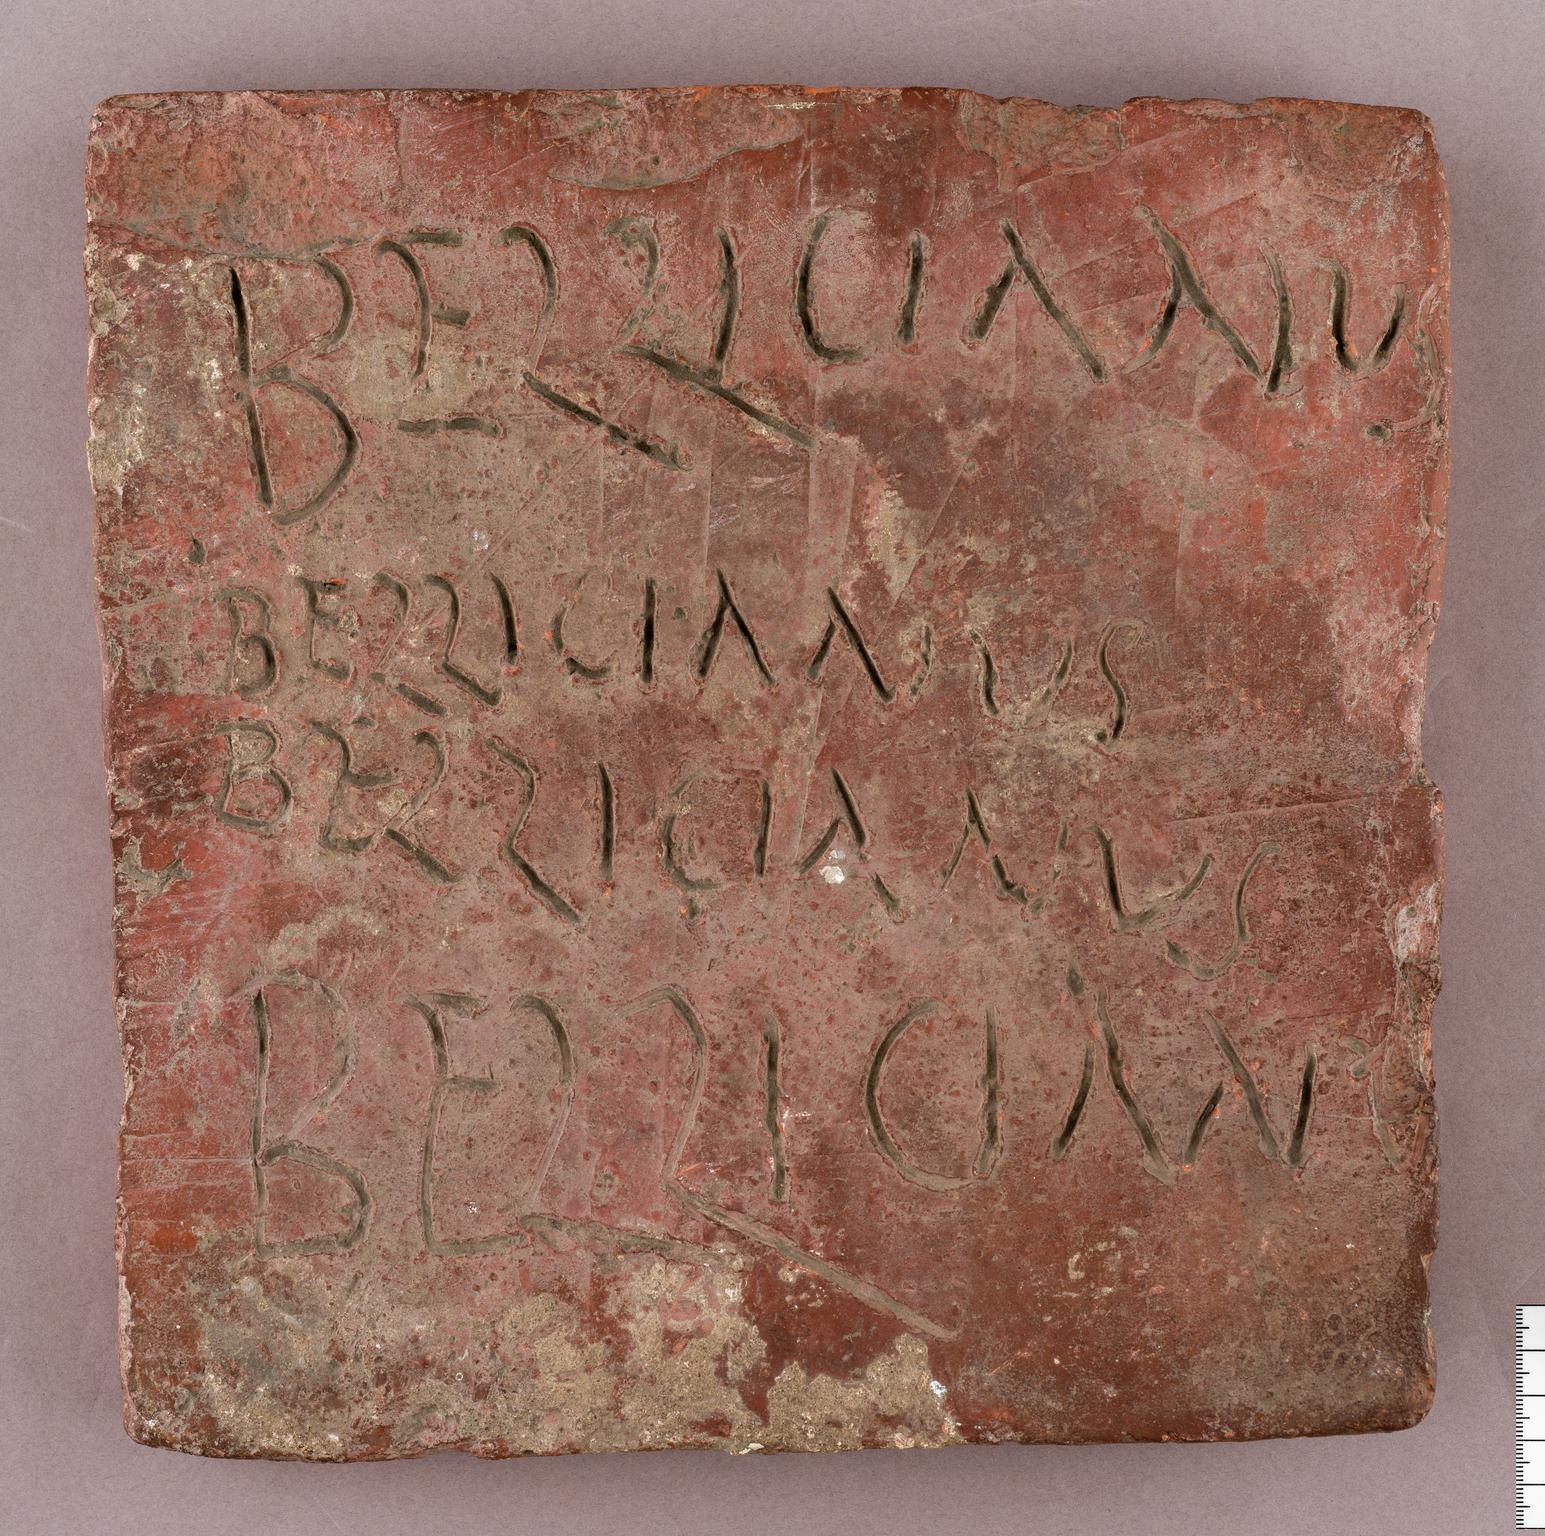 Roman ceramic brick with graffito